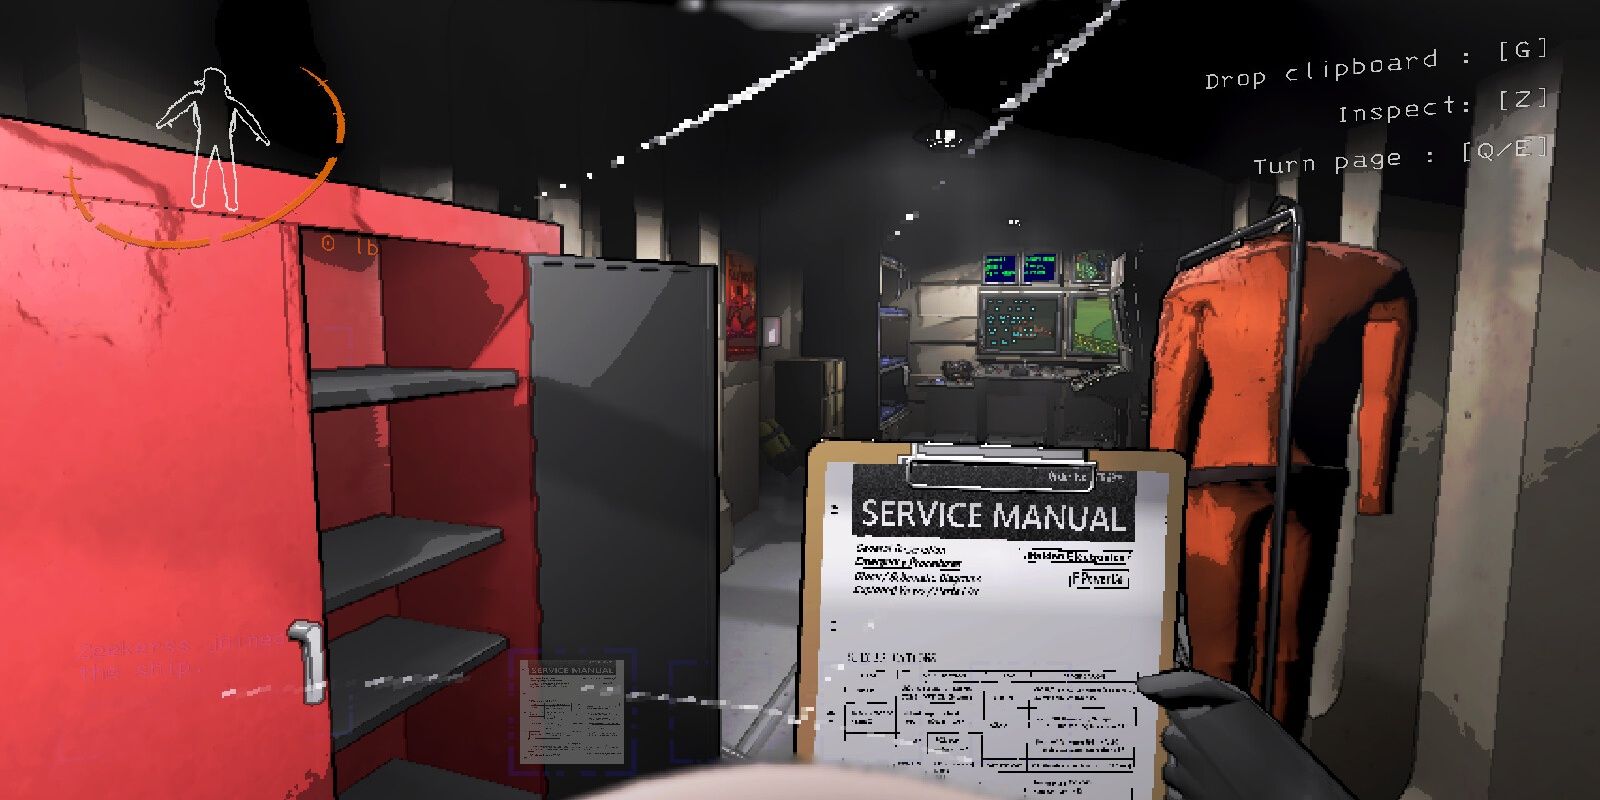 service manual red locker